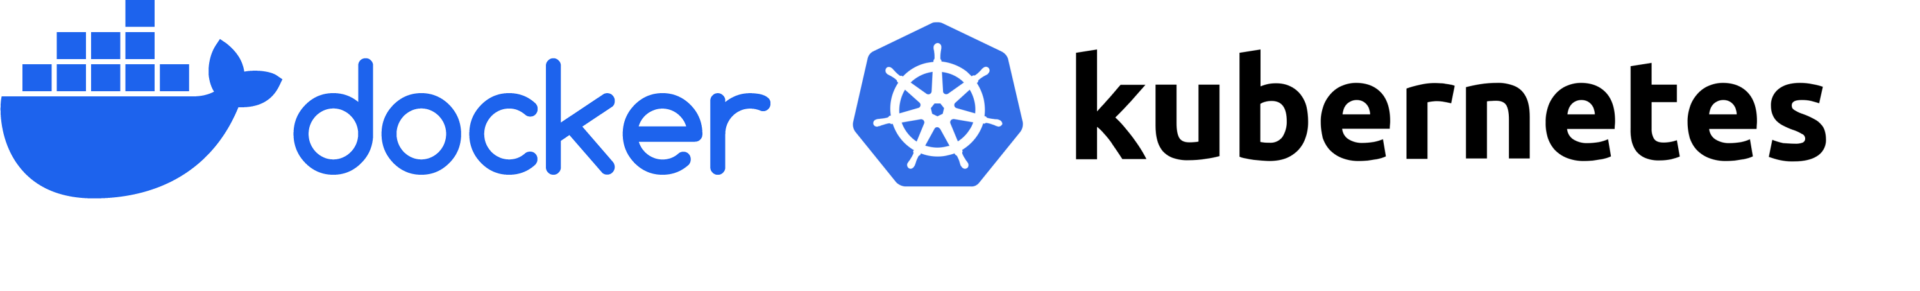 Docker + Kubernetes logotyper